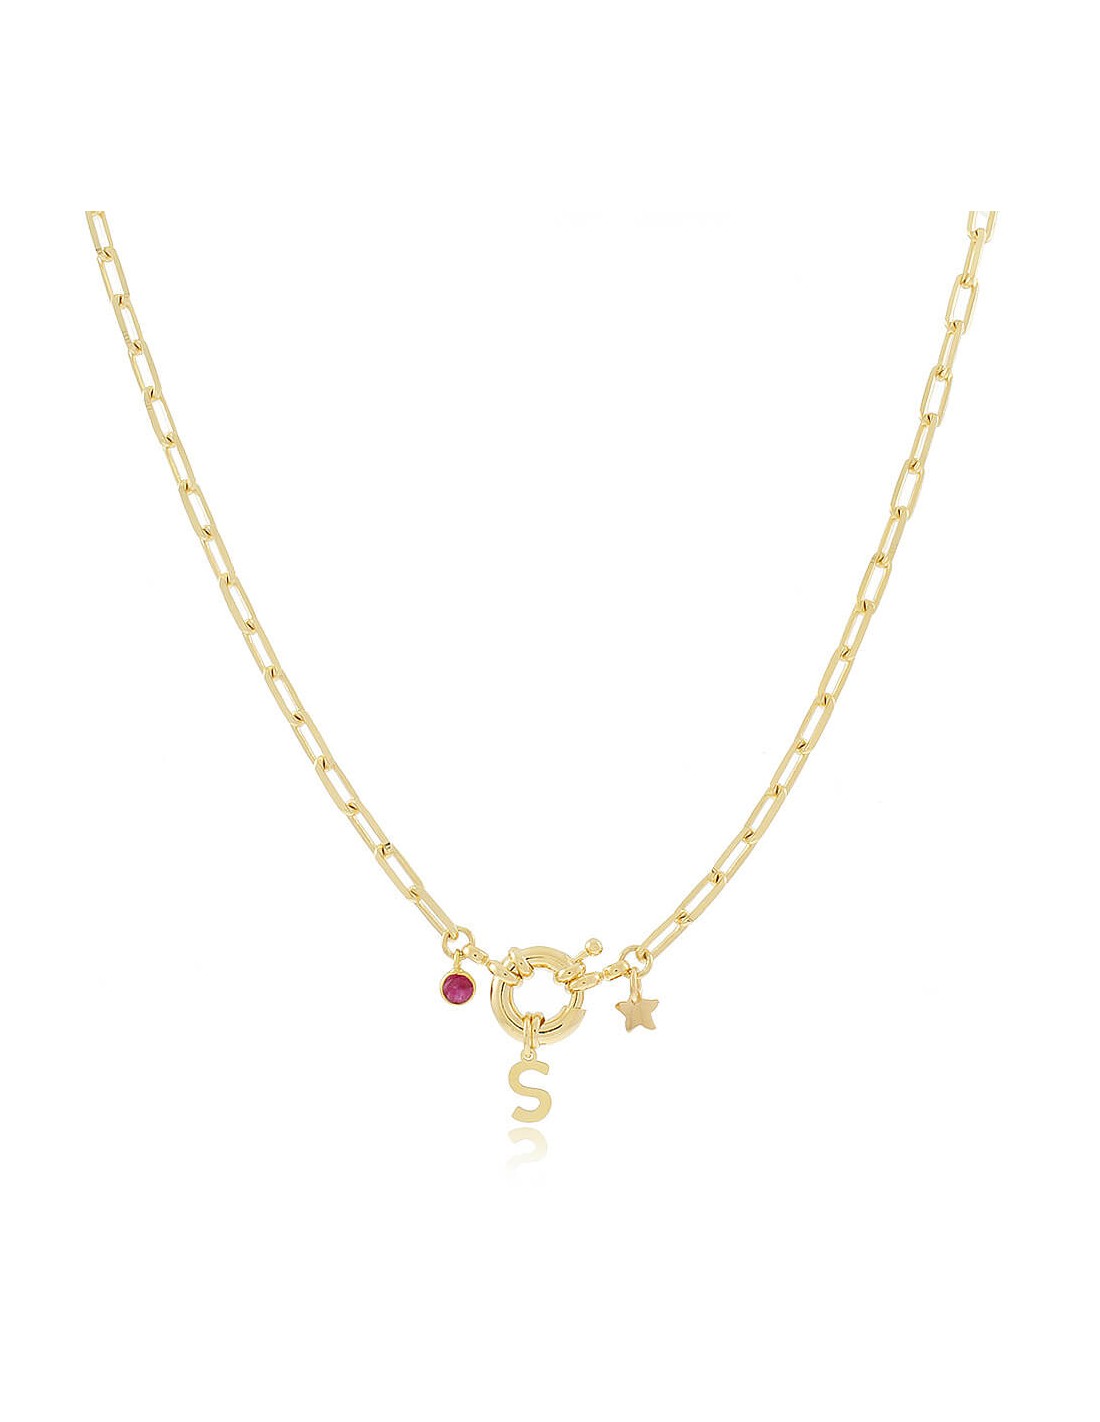 Papillon, Dog Crystal Pendant, Silver Necklace 925